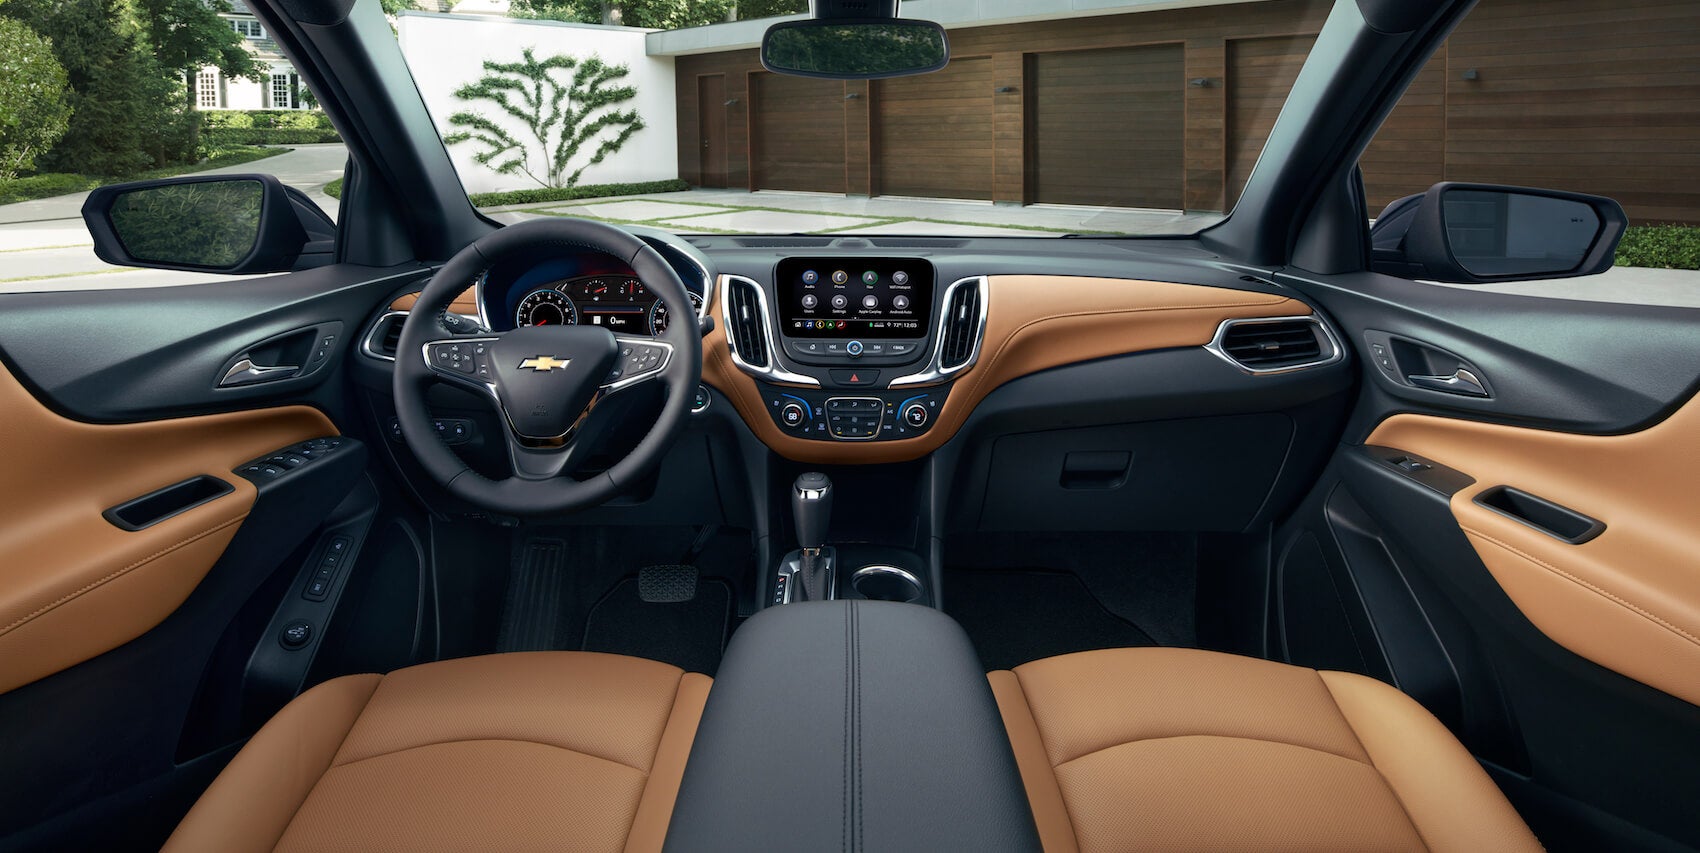 2021 Chevy Equinox interior dashboard